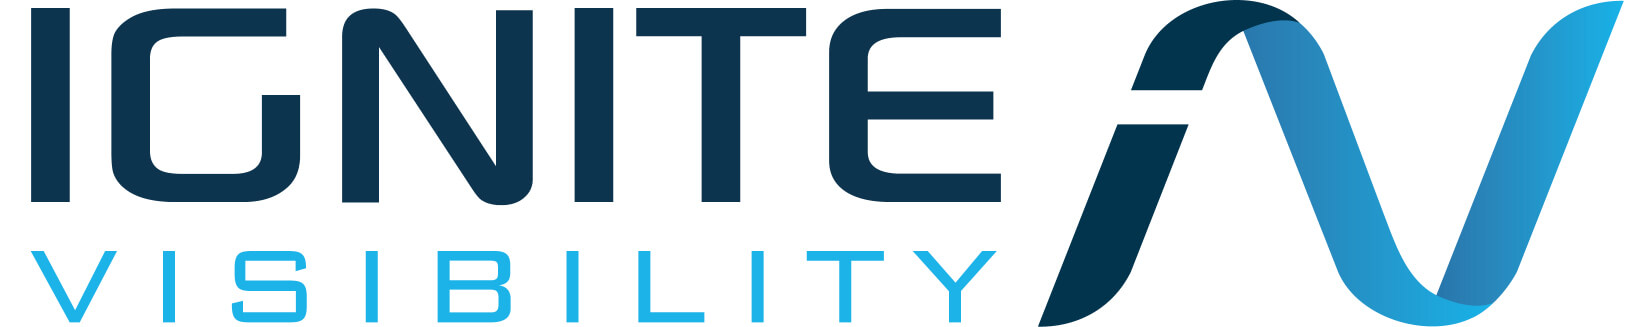 Top Real Estate SEO Company Logo: Ignite Visibility